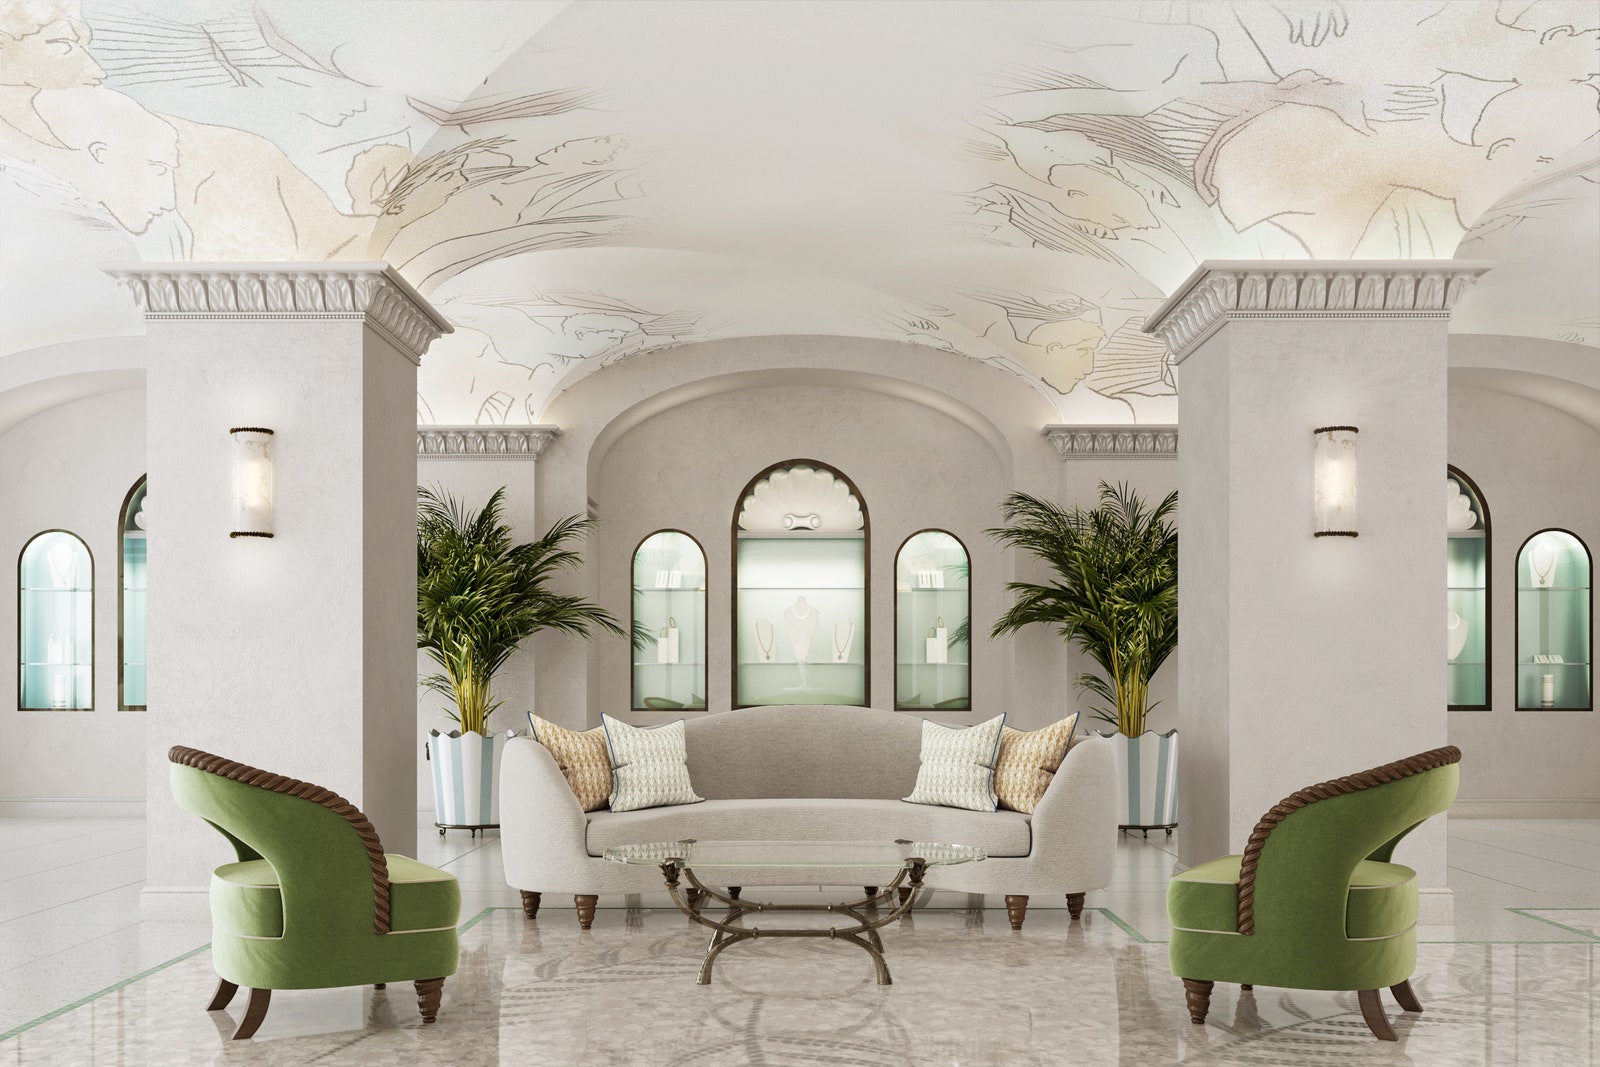 Step Inside Hotel Du Cap-Eden-Roc Owner’s Stunning New Hotel In Capri